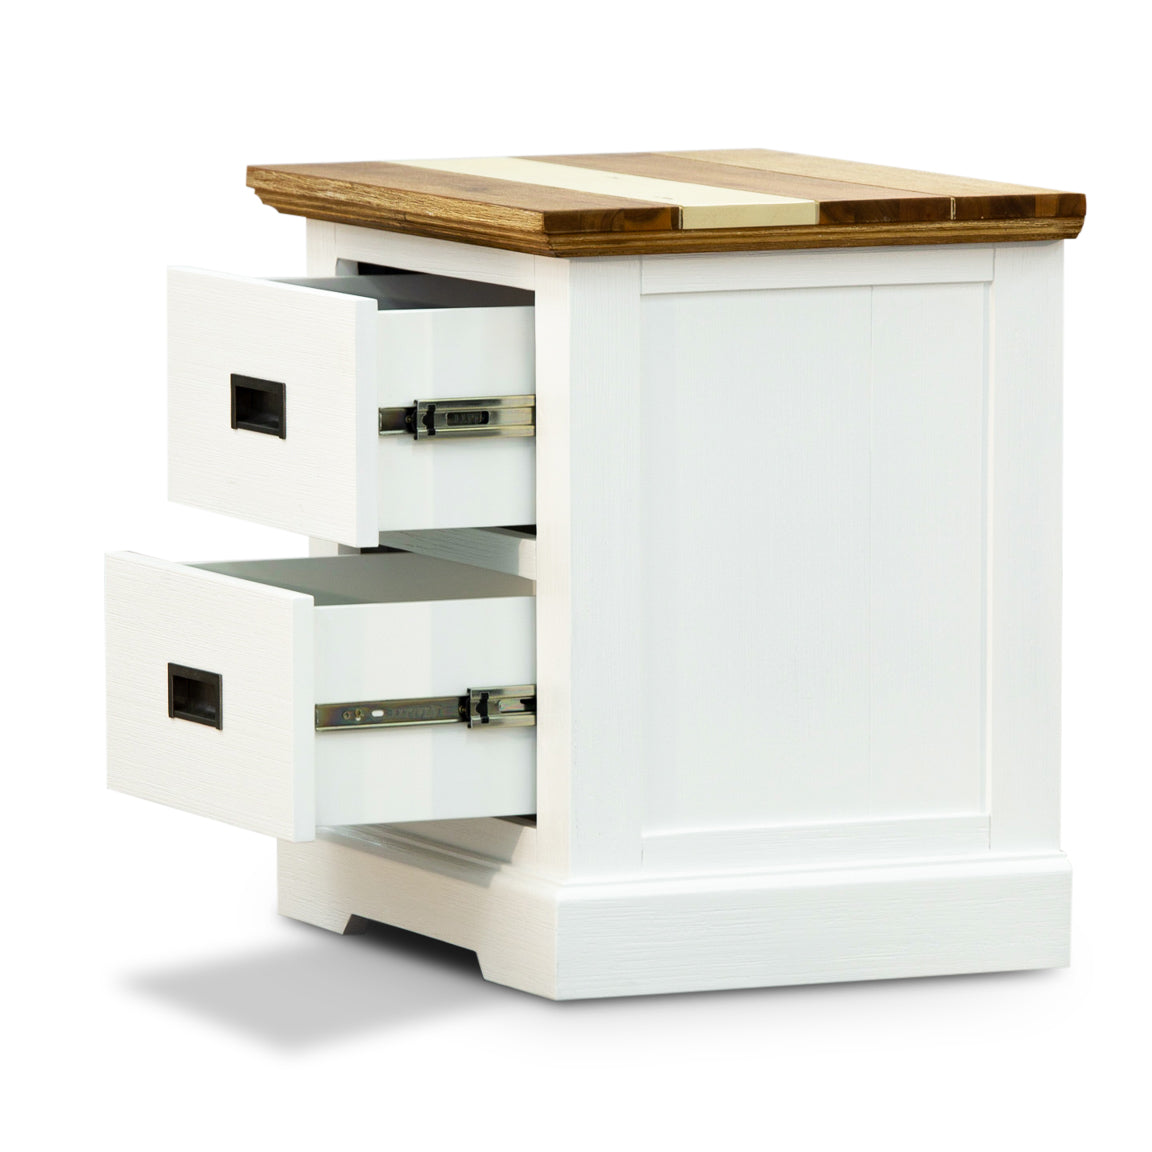 Orville Bedside Tables Drawers Storage Cabinet Shelf Side End Table - MultiColor